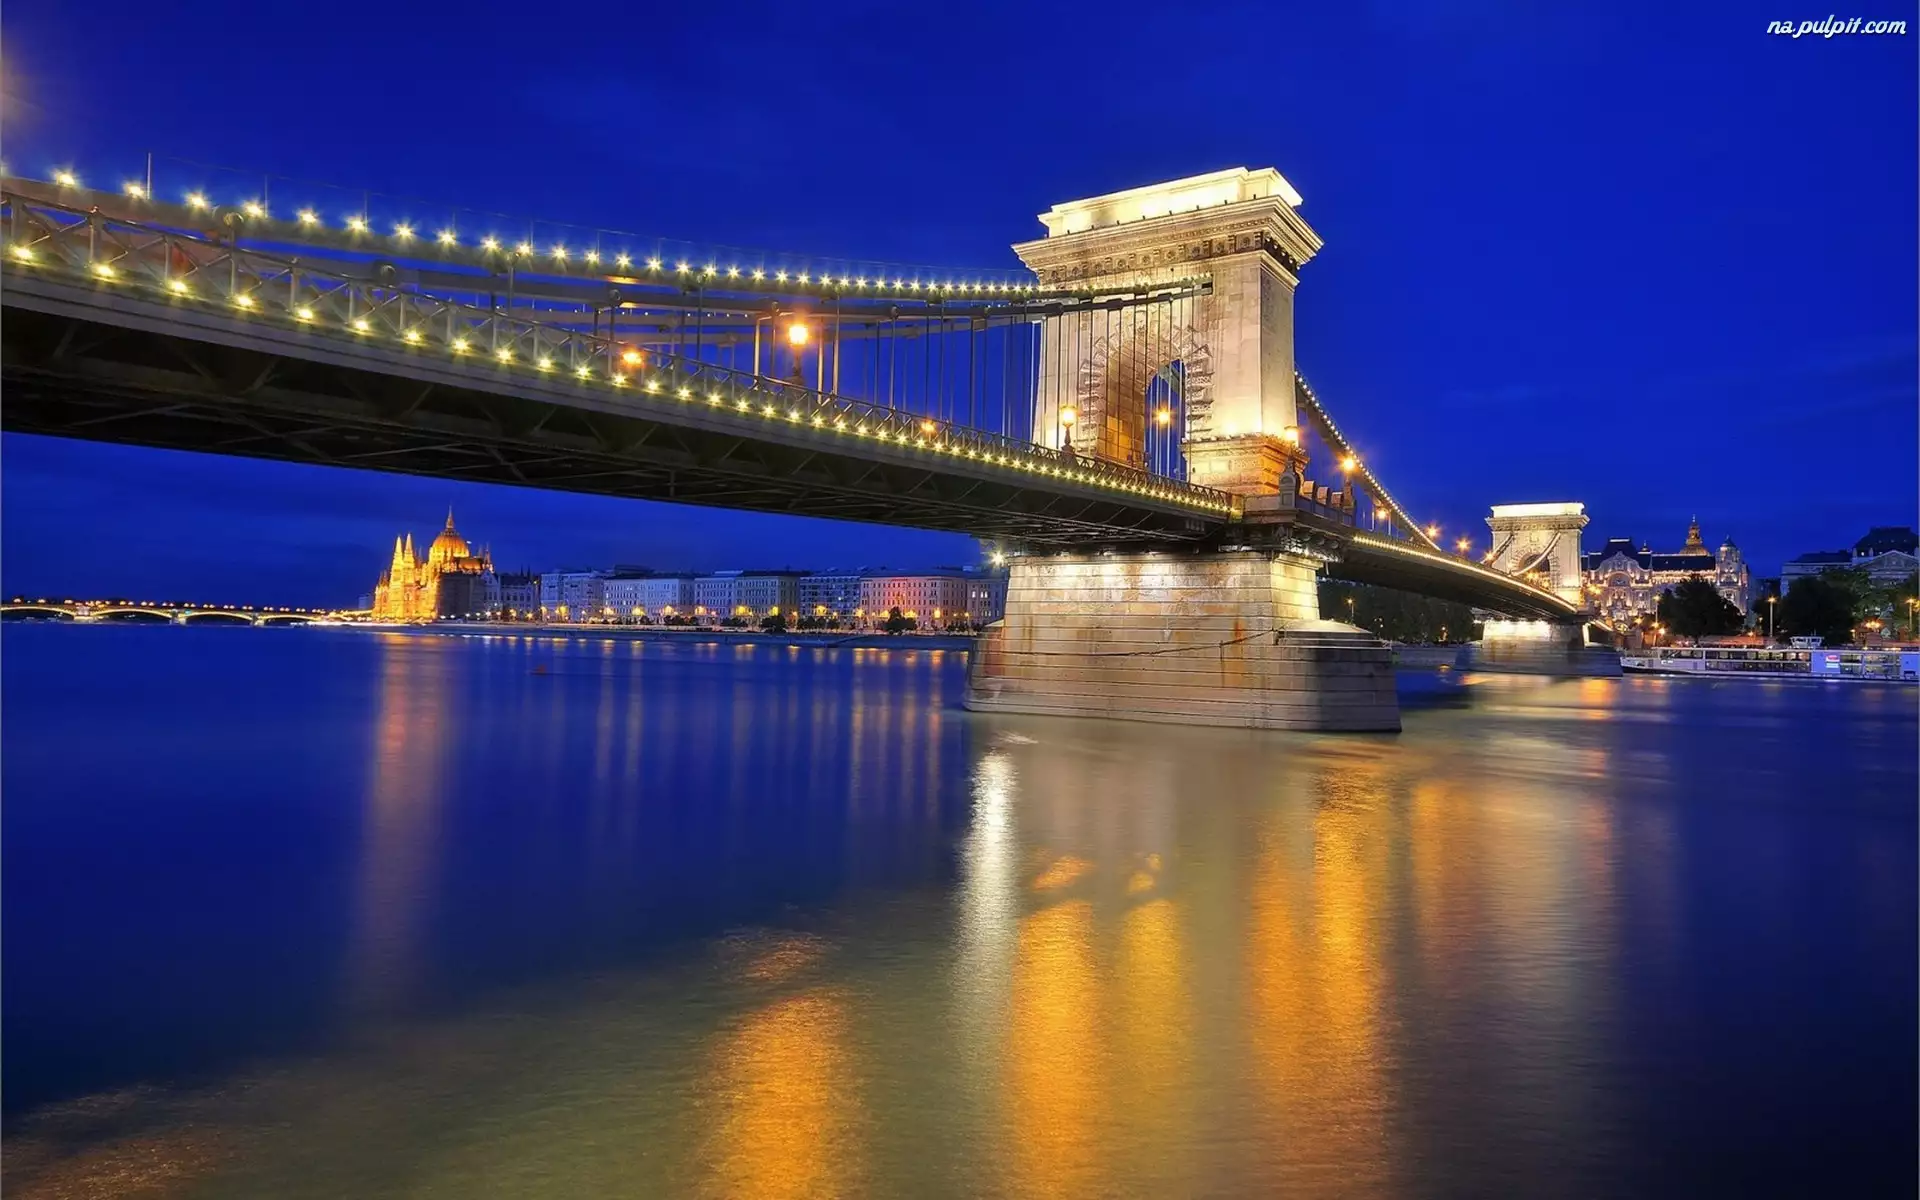 Budapeszt, Most, Miasto nocą